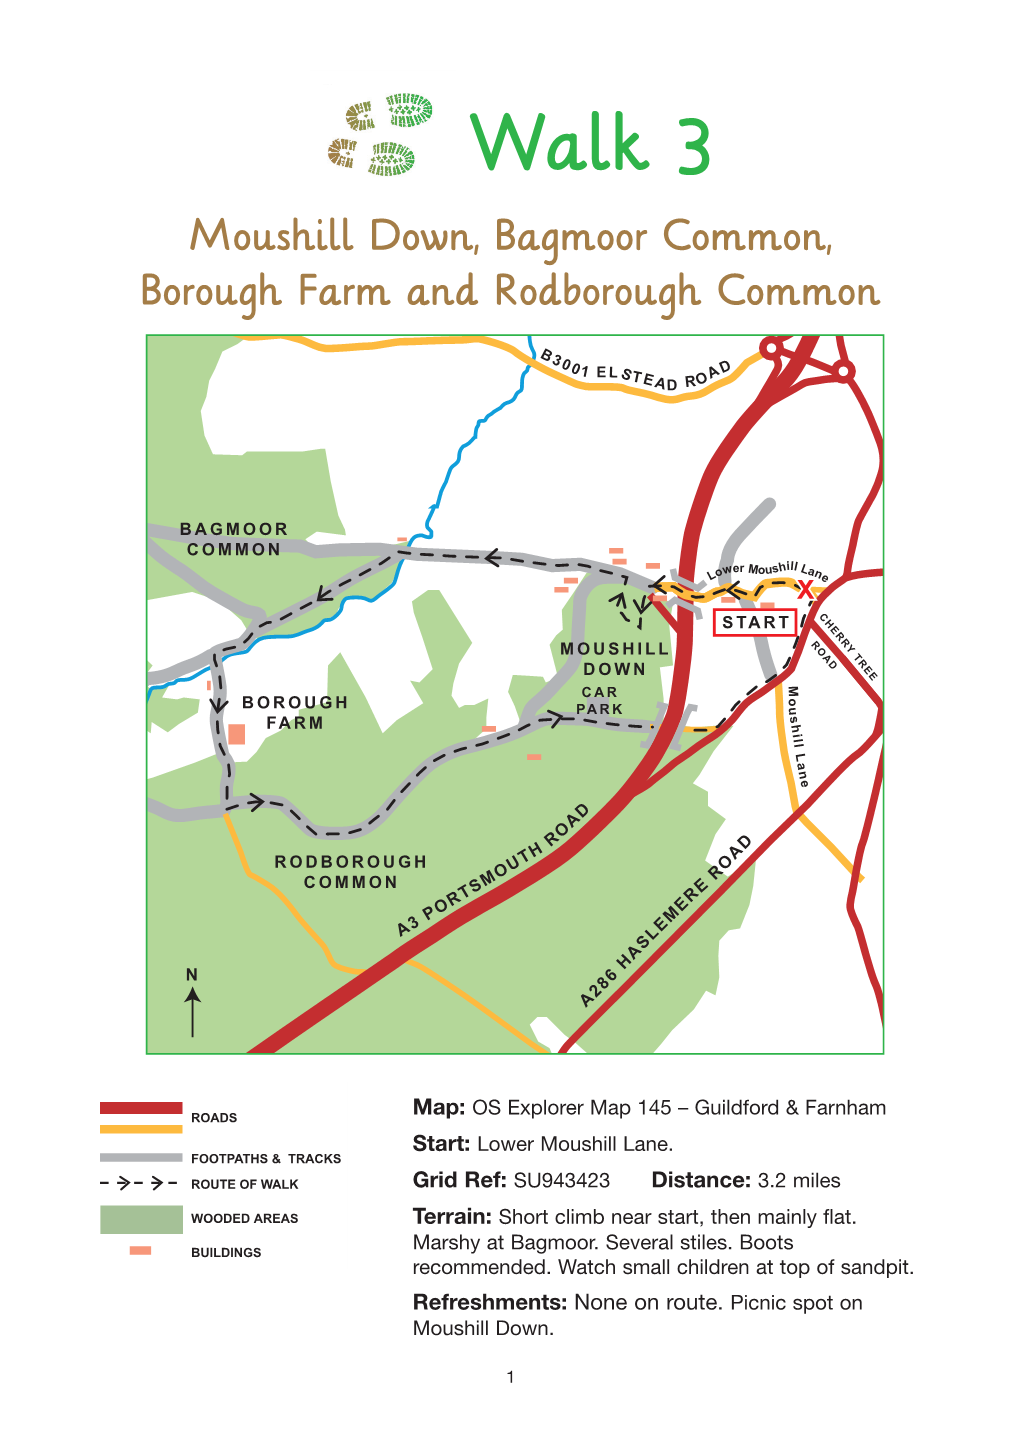 Moushill Down, Bagmoor Common, Borough Farm and Rodborough Common